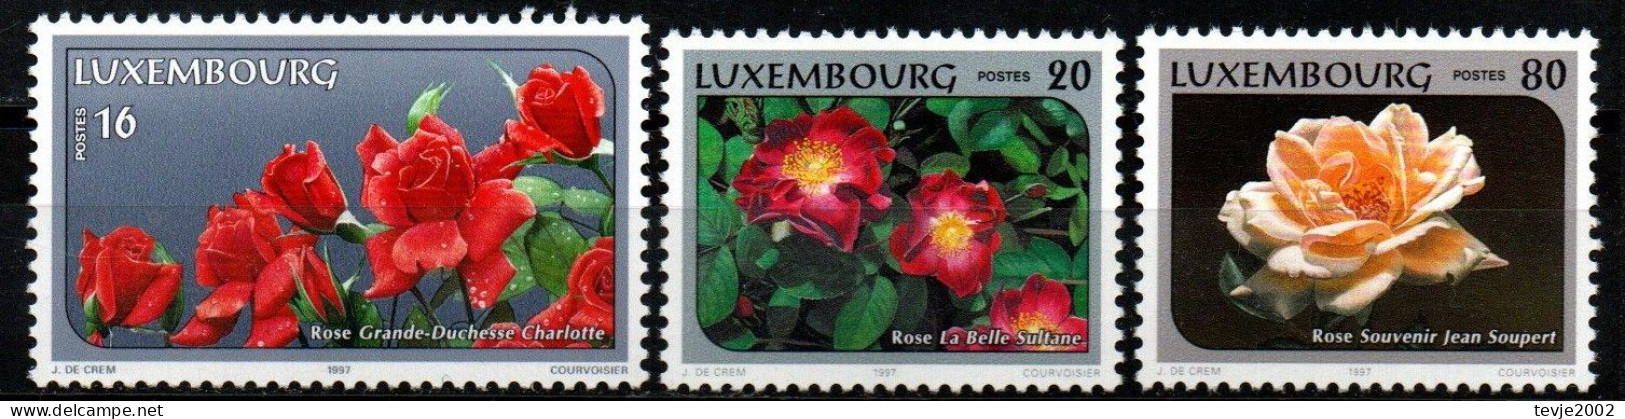 Luxemburg 1997 - Mi.Nr. 1411 - 1413 - Postfrisch MNH - Blumen Flowers Rosen Roses - Rose